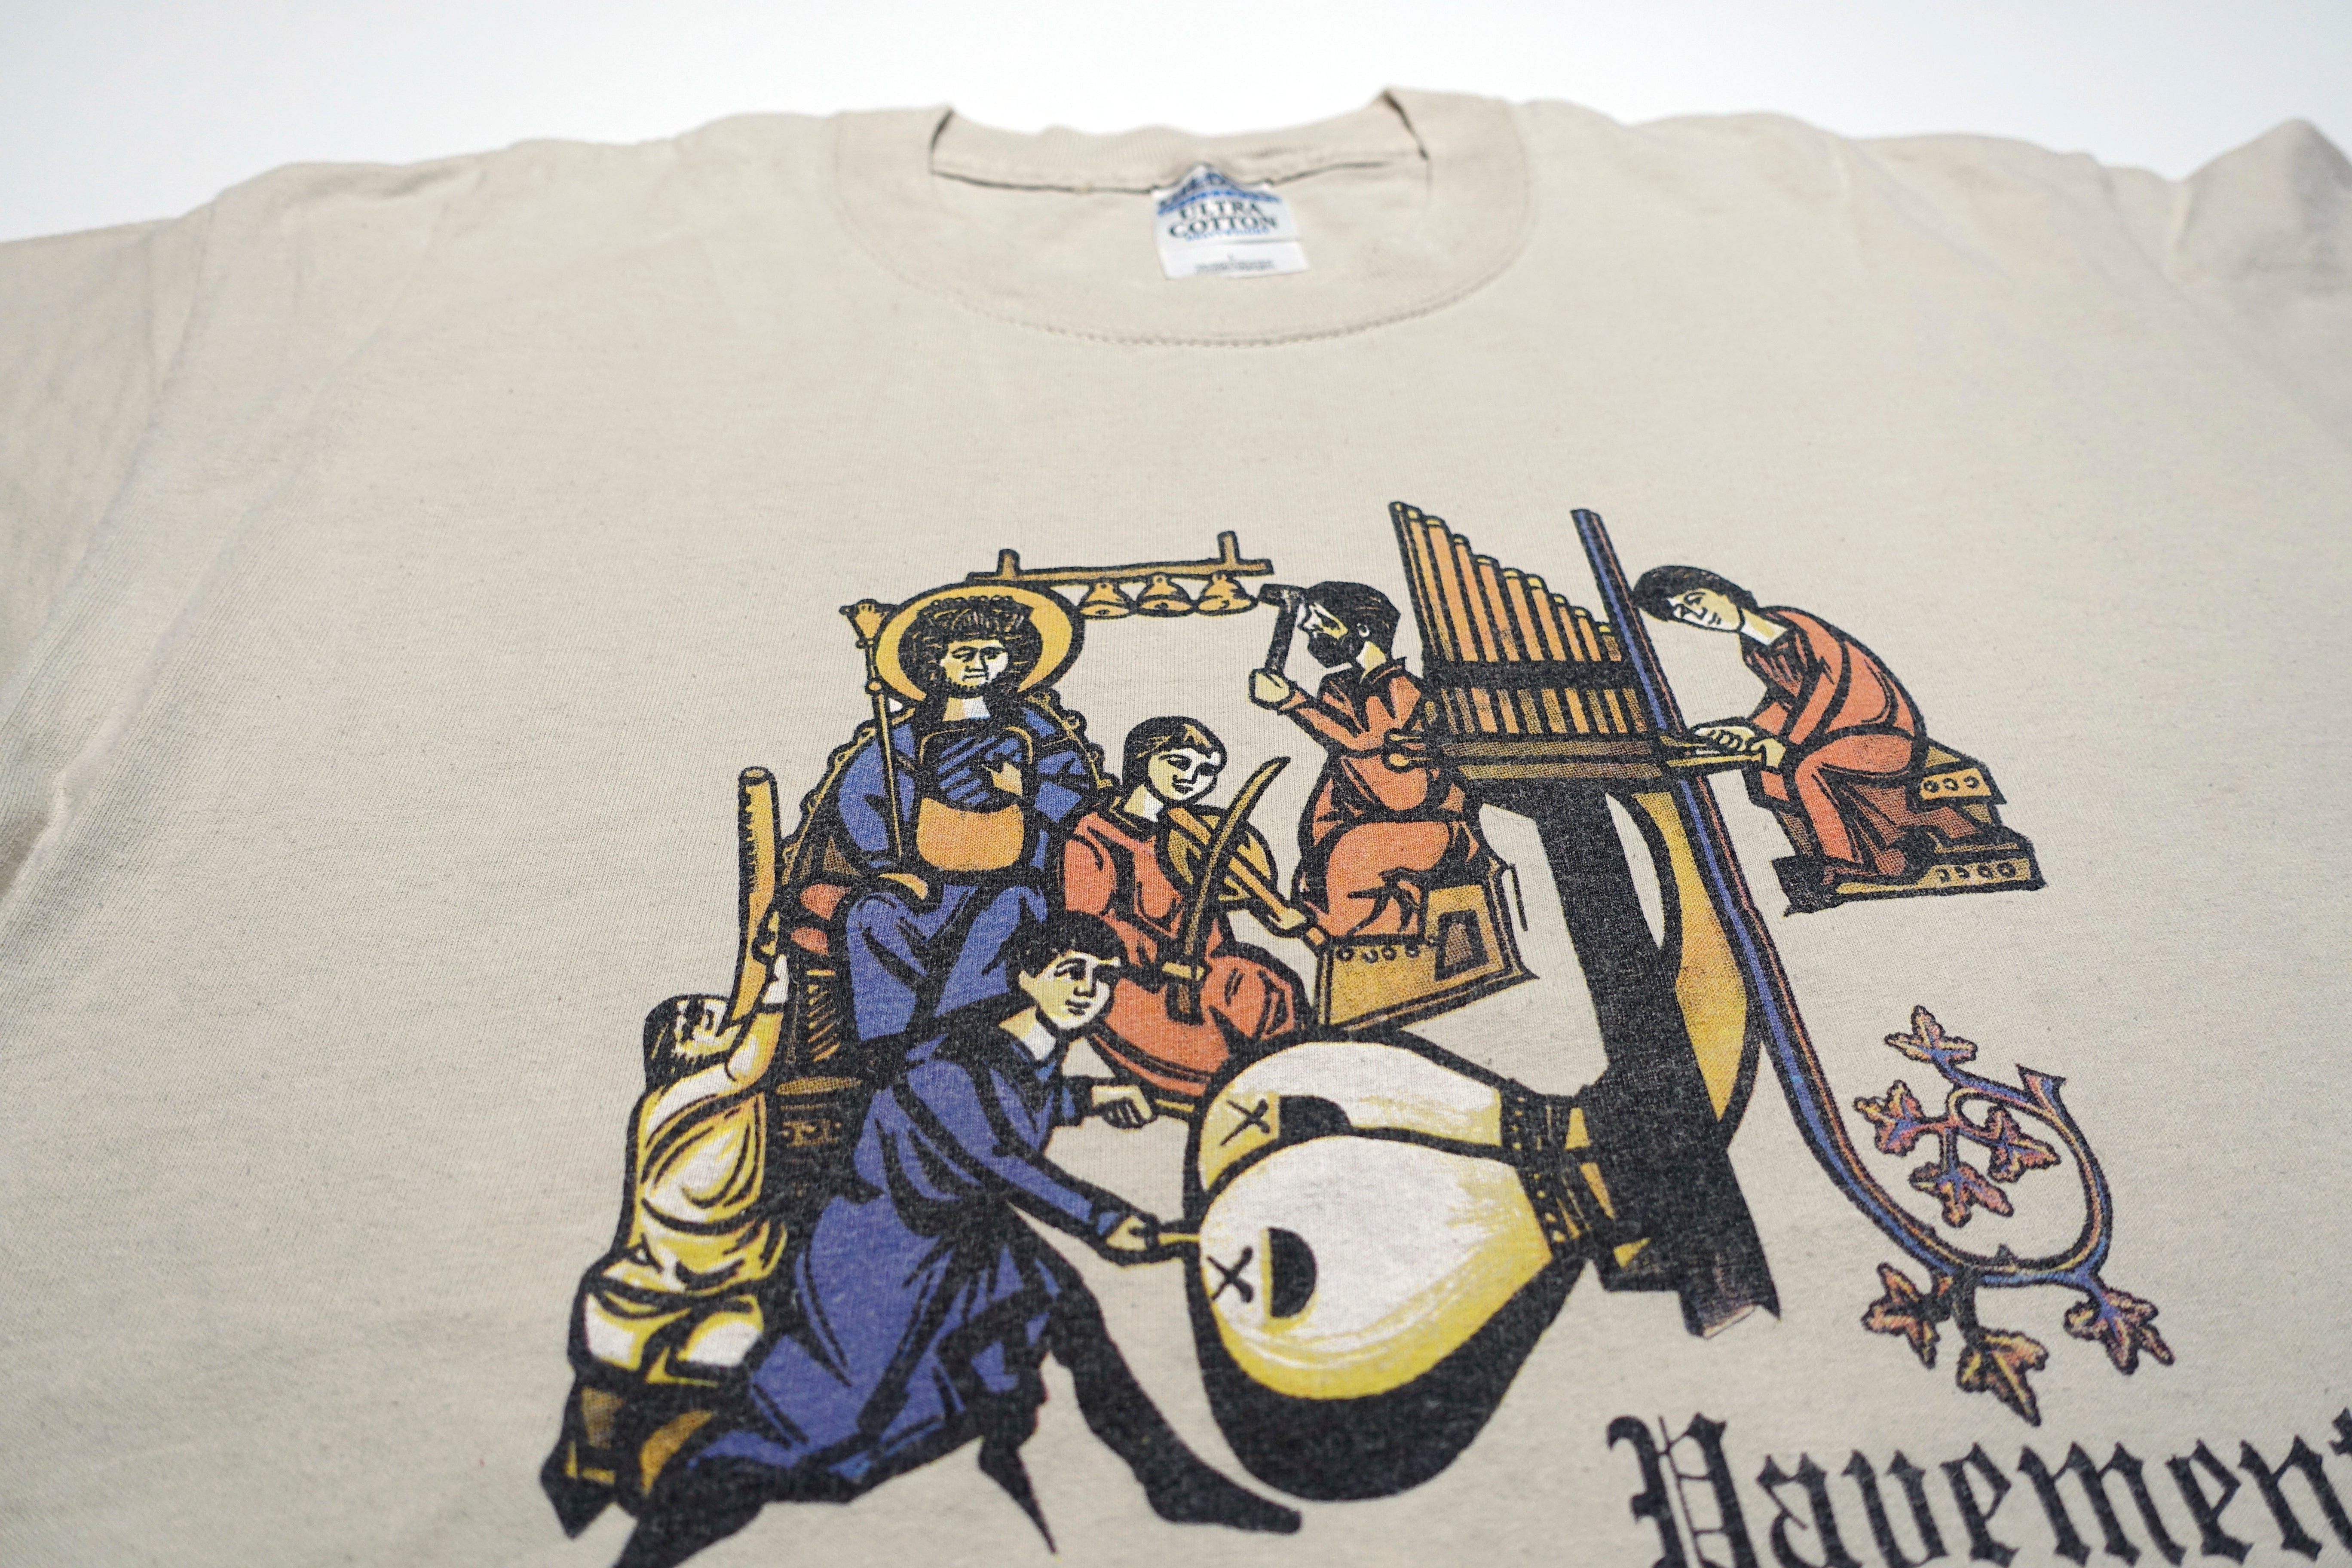 Pavement - Monk Band 90's Tour Shirt Size Large